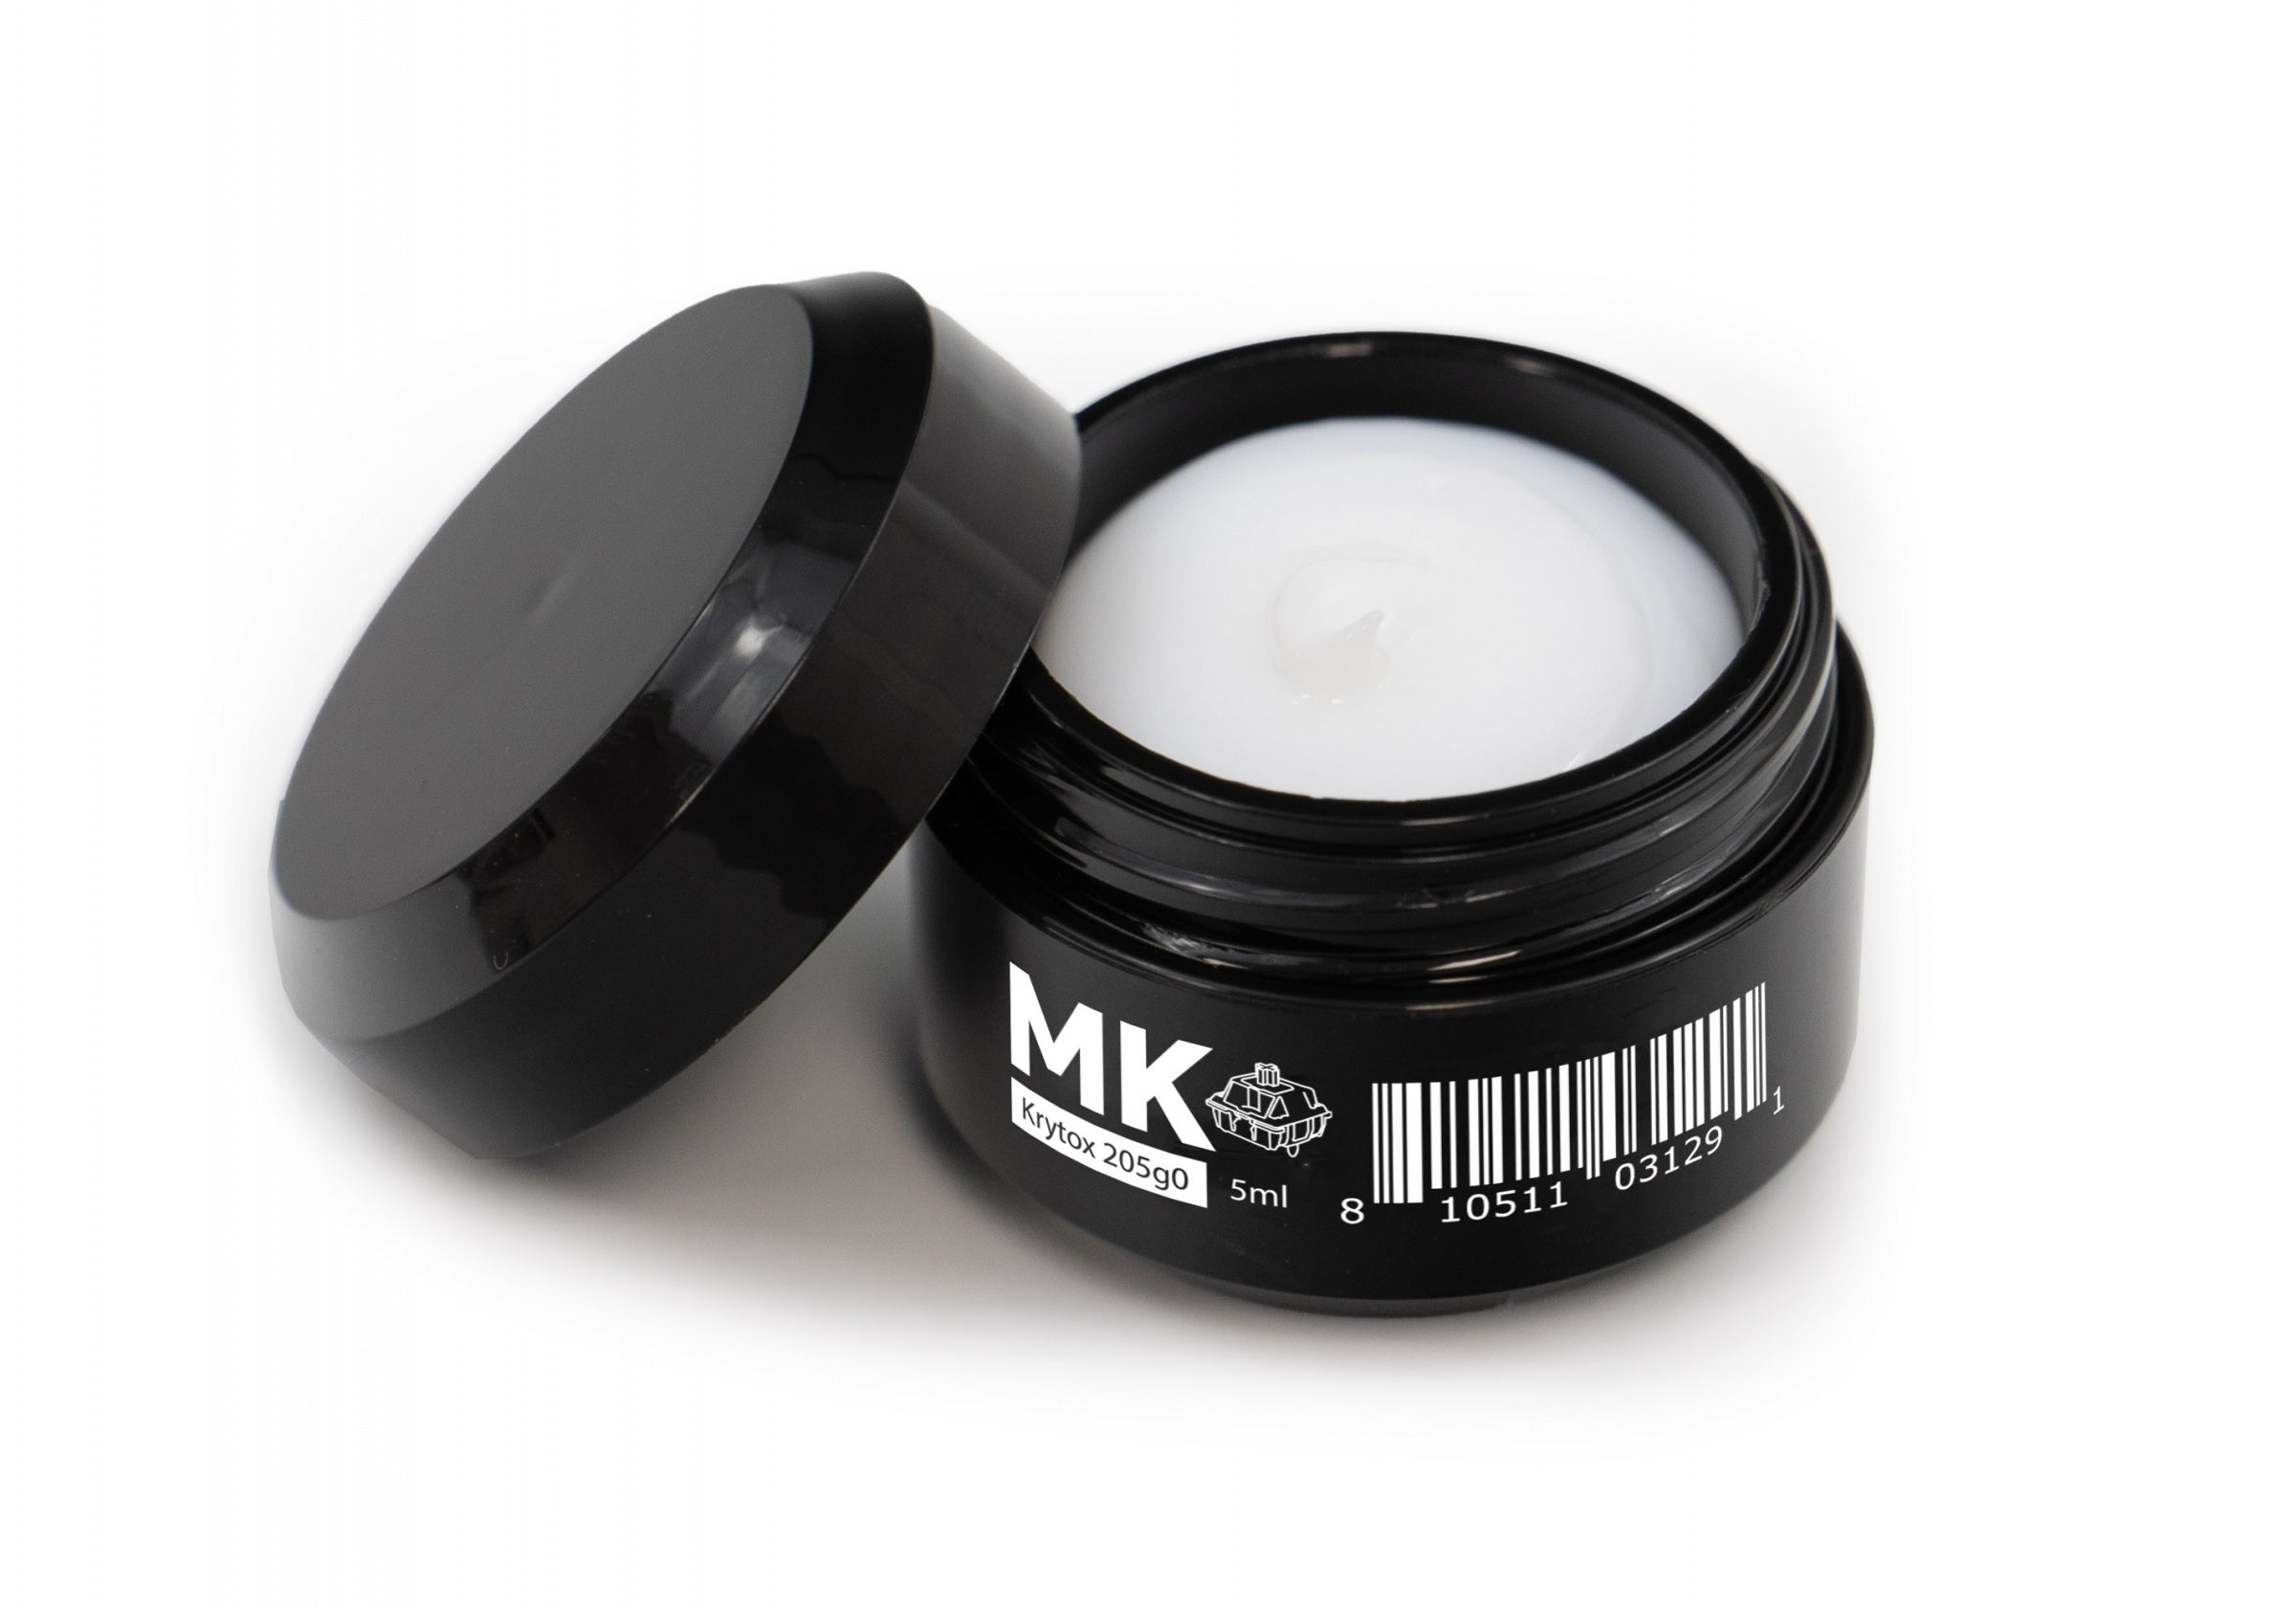 MK Krytox 205g0 Lube 5ml MKDV8KOKU7 |0|